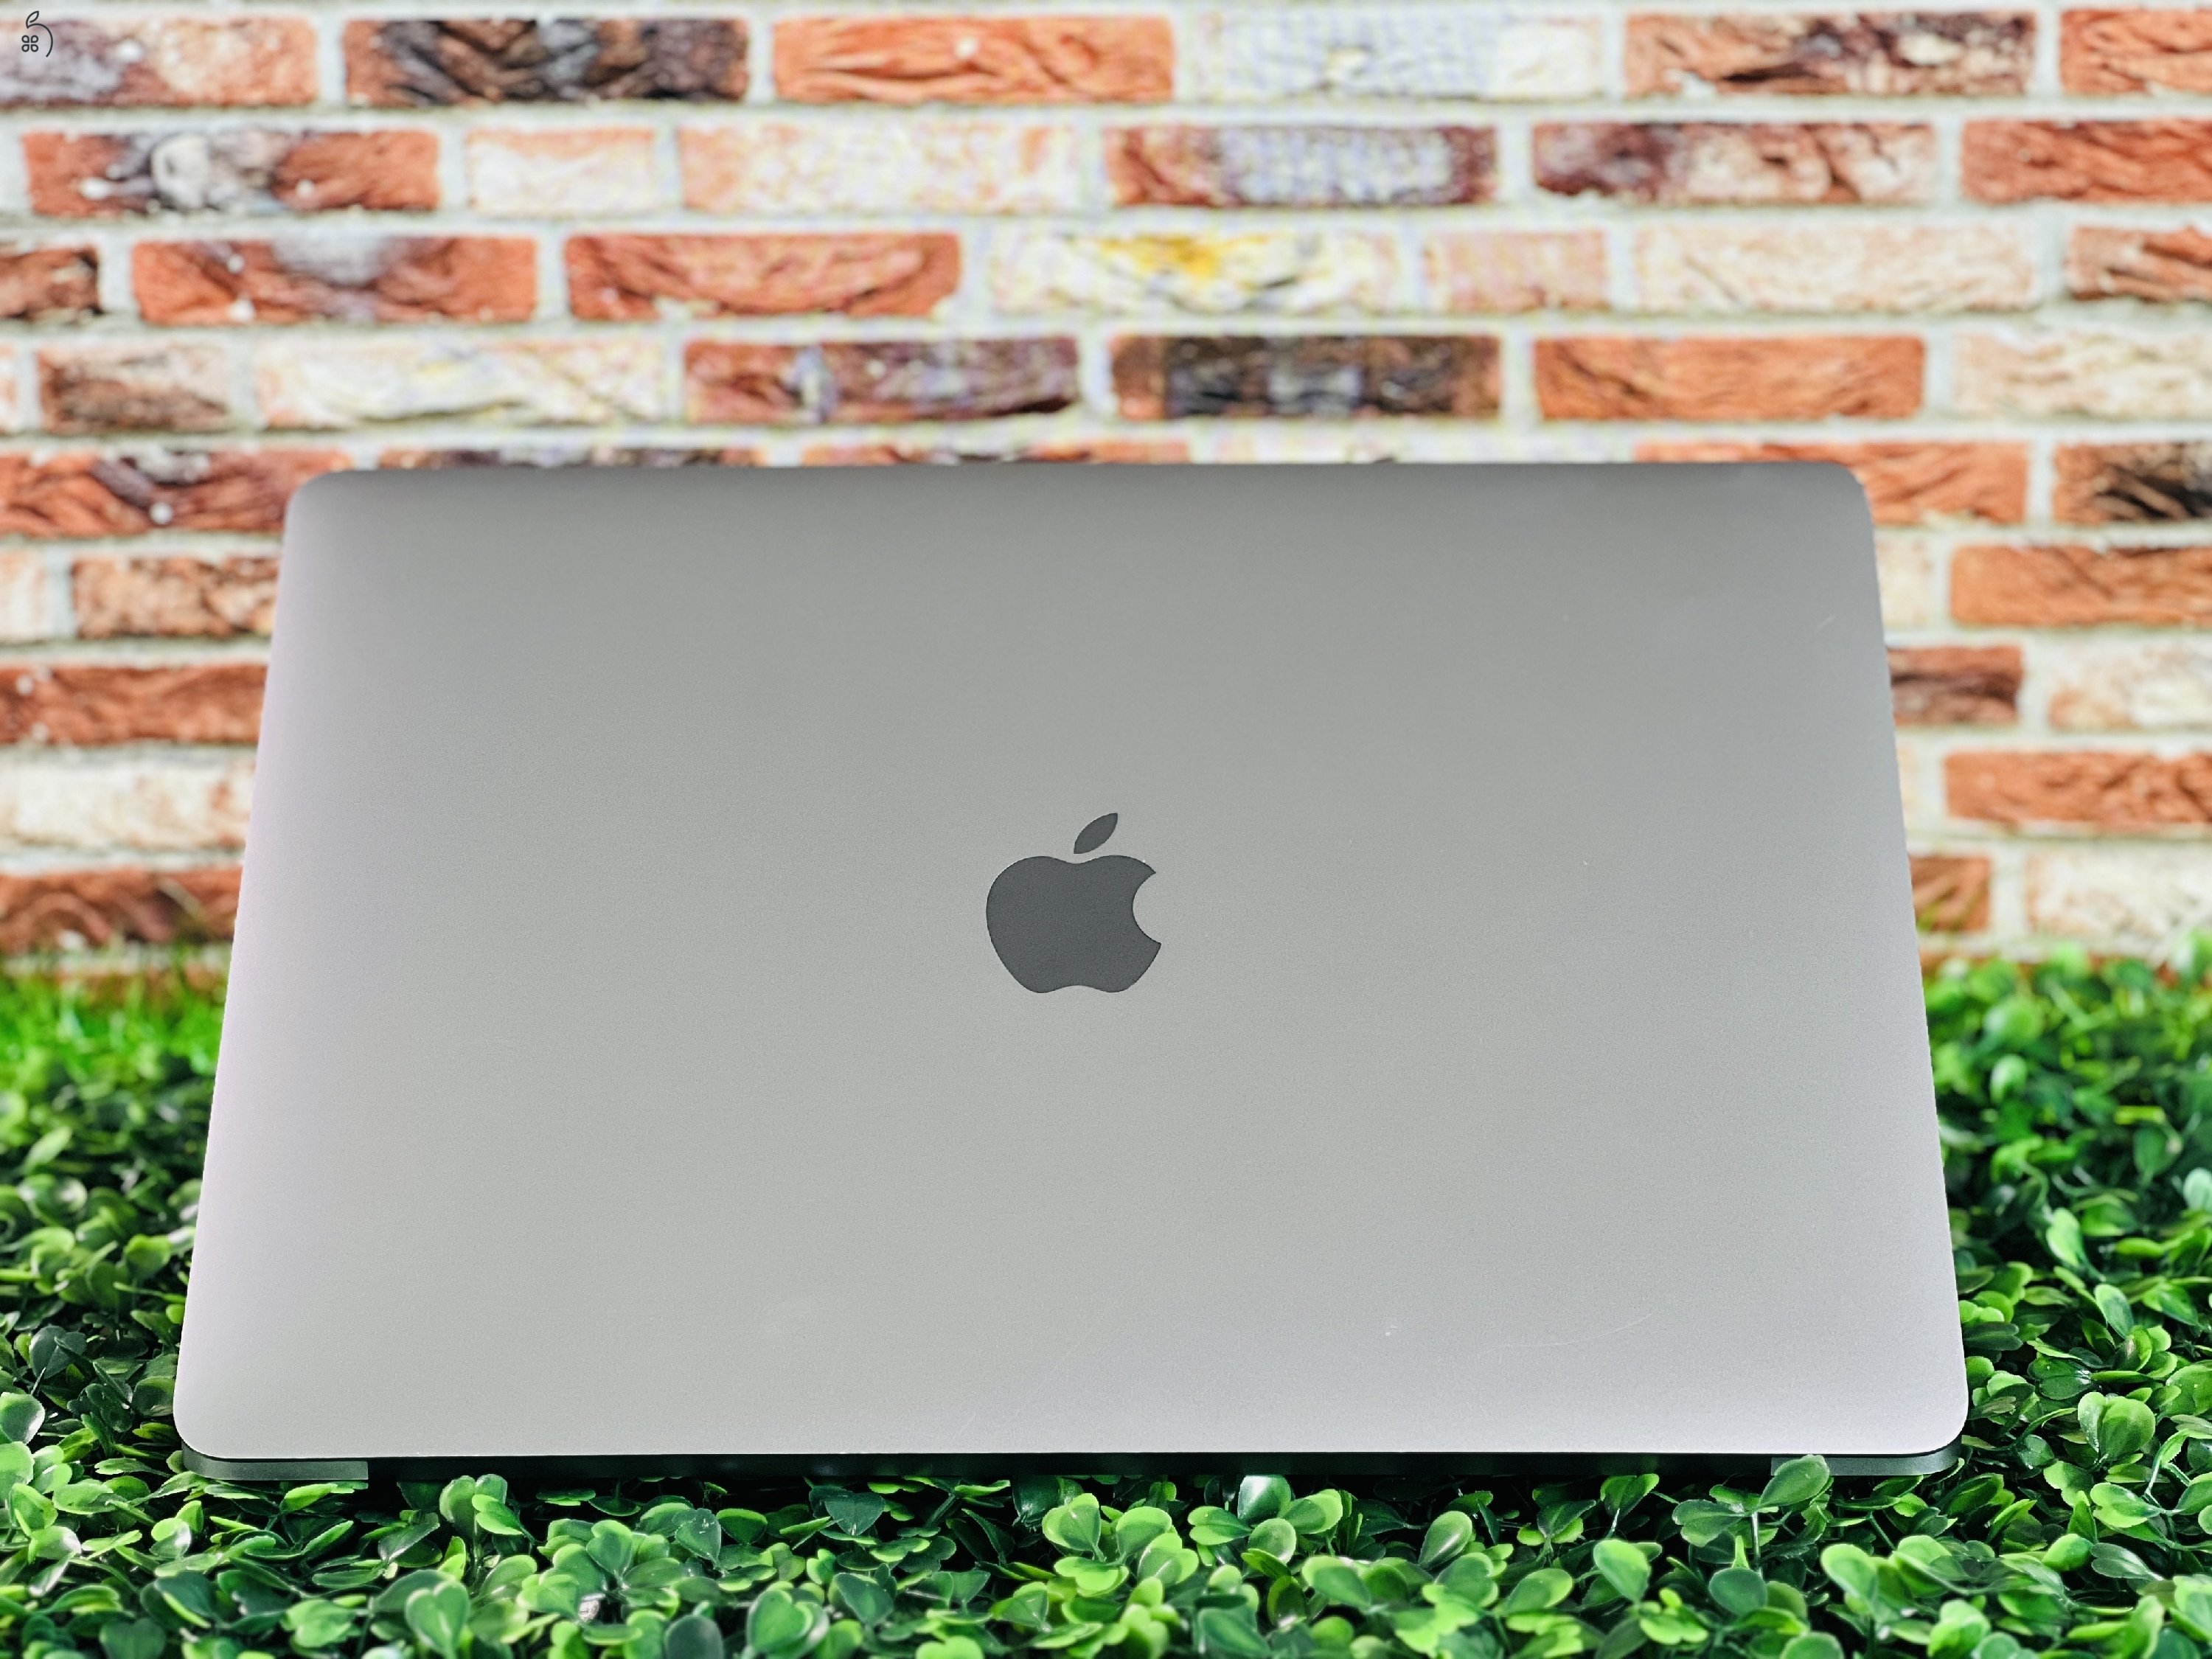 Eladó Apple Macbook AIR 256 GB Space Gray 2020 13 M1 8 GB SSD - 12 HÓ GARANCIA - 1461